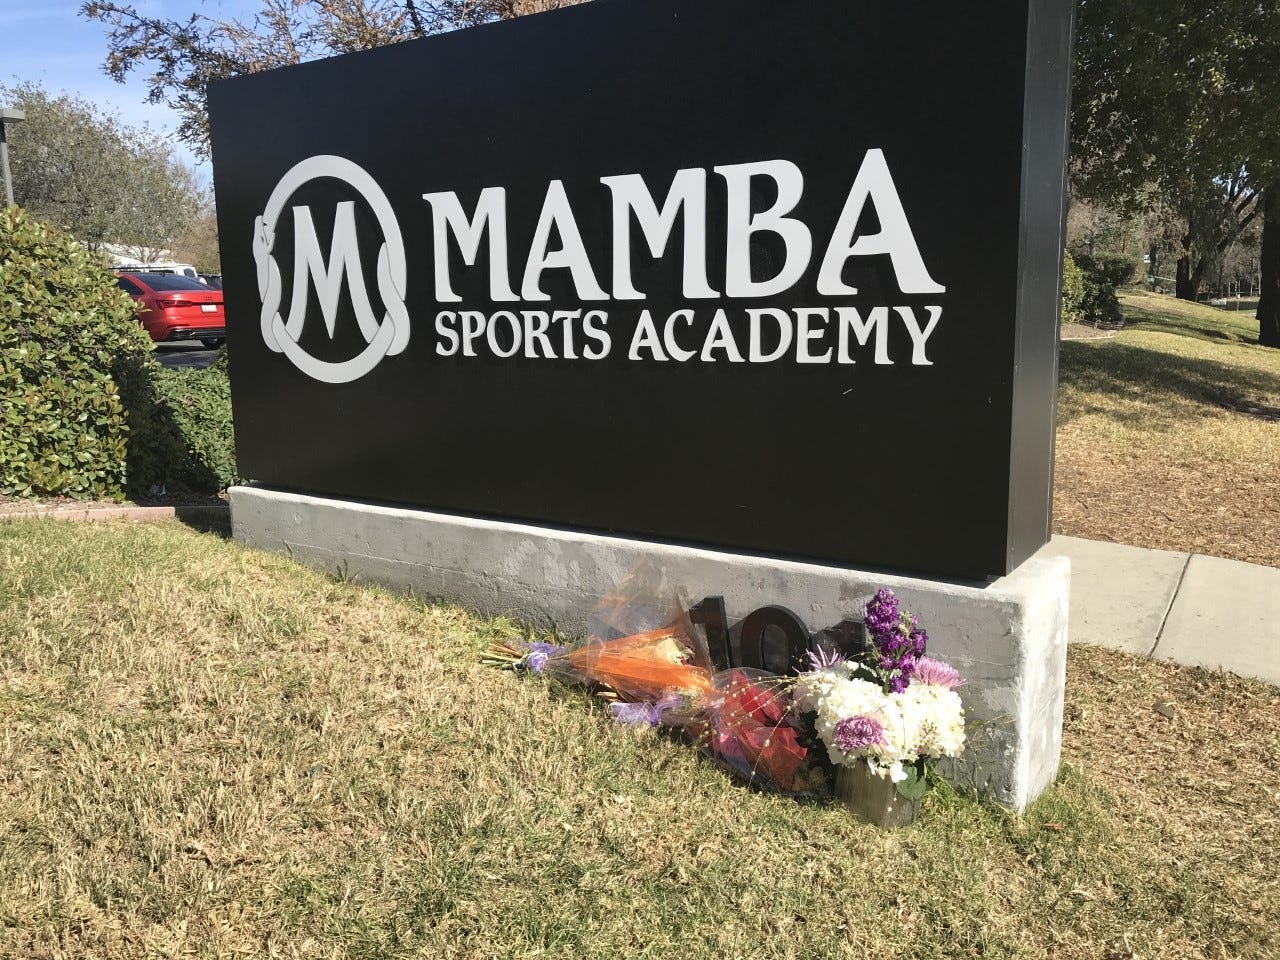 Mamba Sports Academy changed but Kobe Bryant's spirit remains